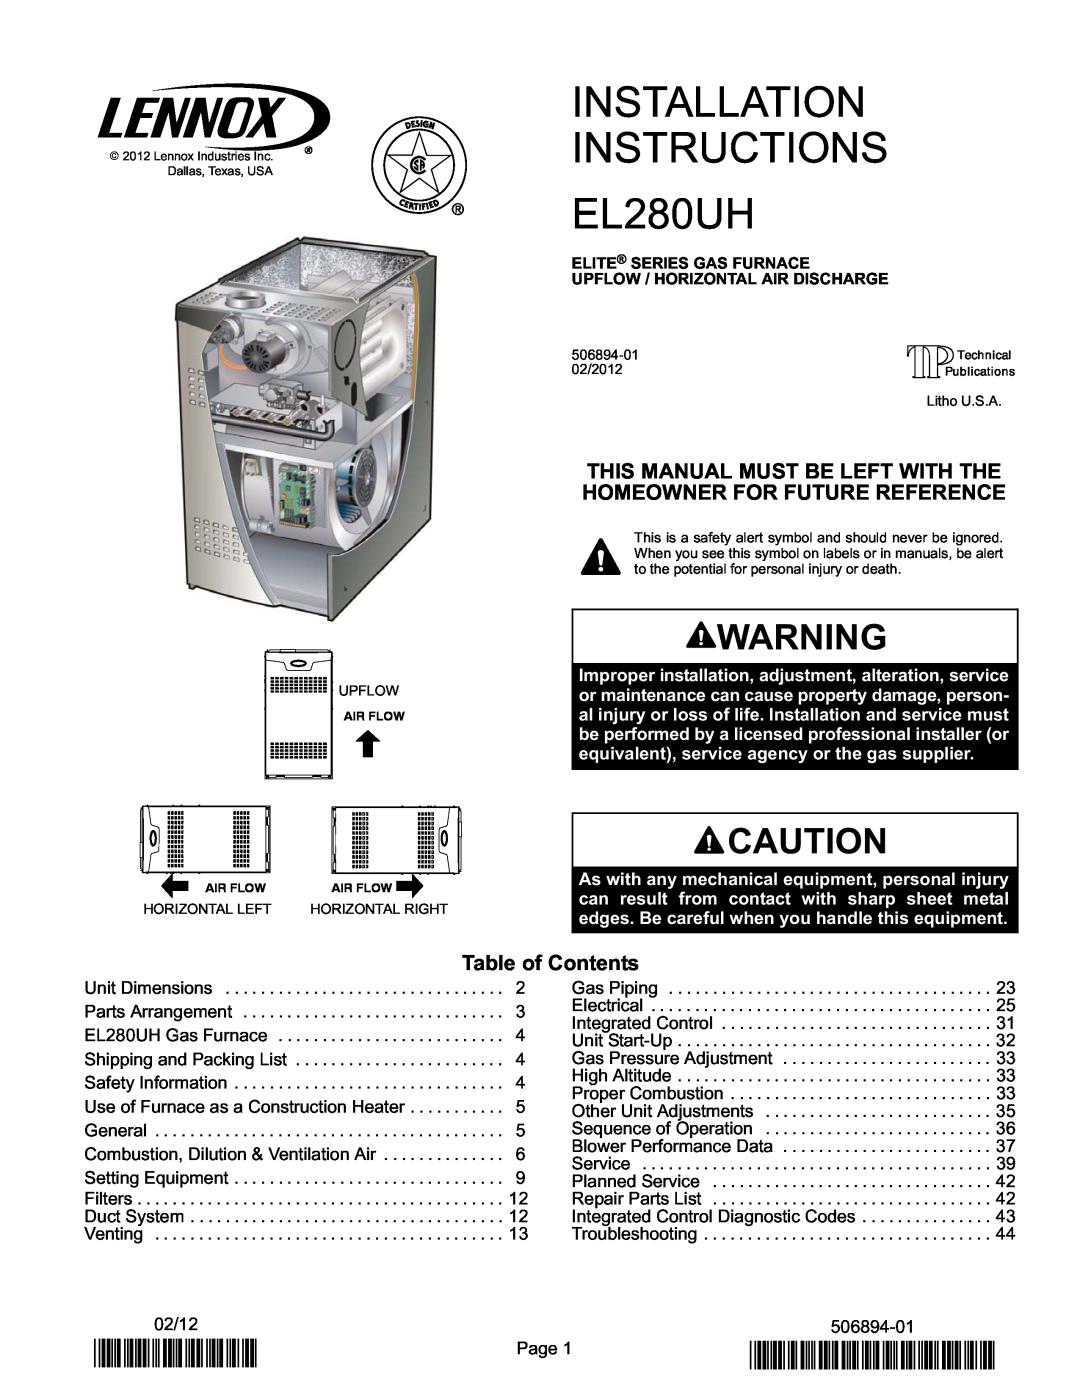 Lennox International Inc manual Gas Furnace, EL280UH SERIES, 2P0112, P506895-01, Fire Or Explosion Hazard 